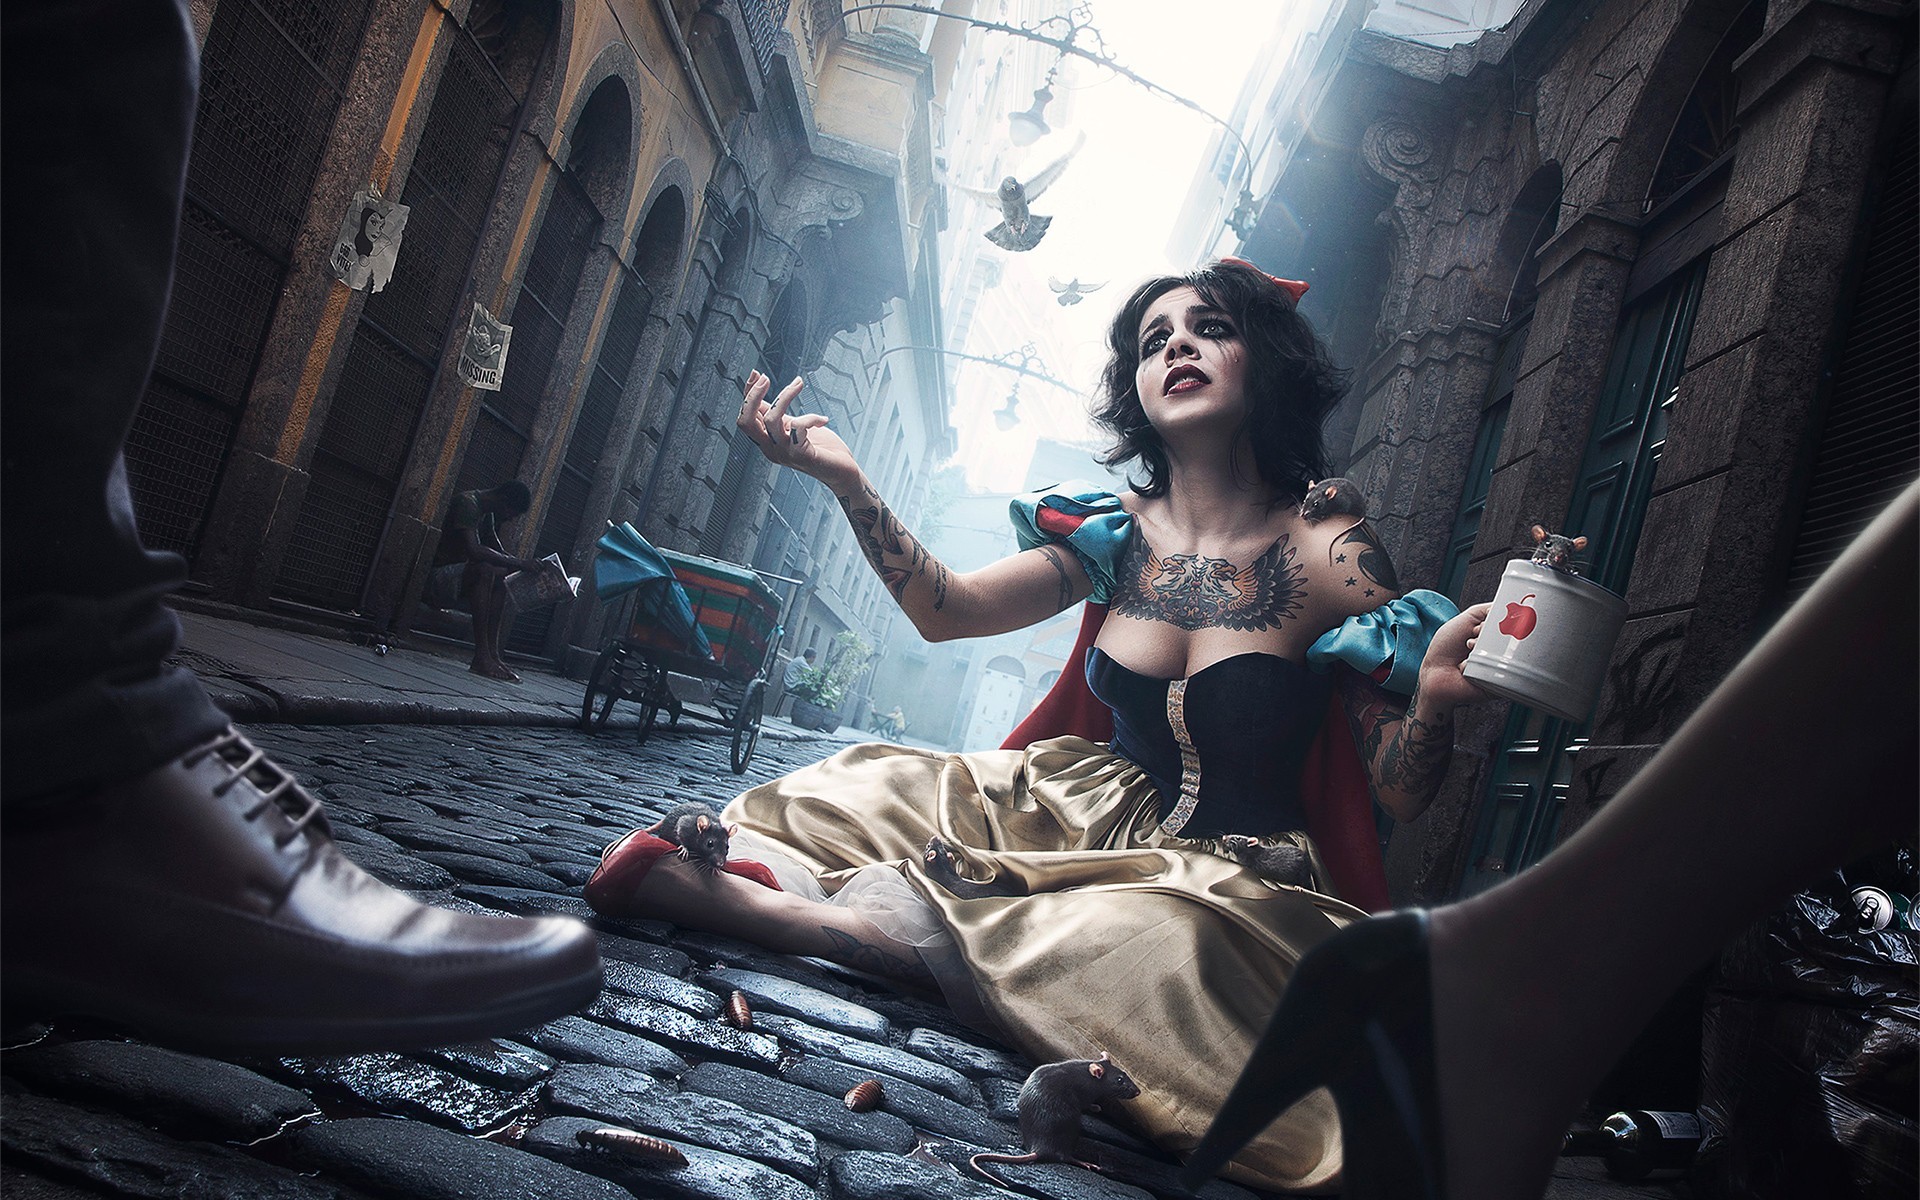 Tattoo Mice High Heels Snow White Pavements Digital Art Street Cup Makeup Fantasy Art Fantasy Girl R 1920x1200